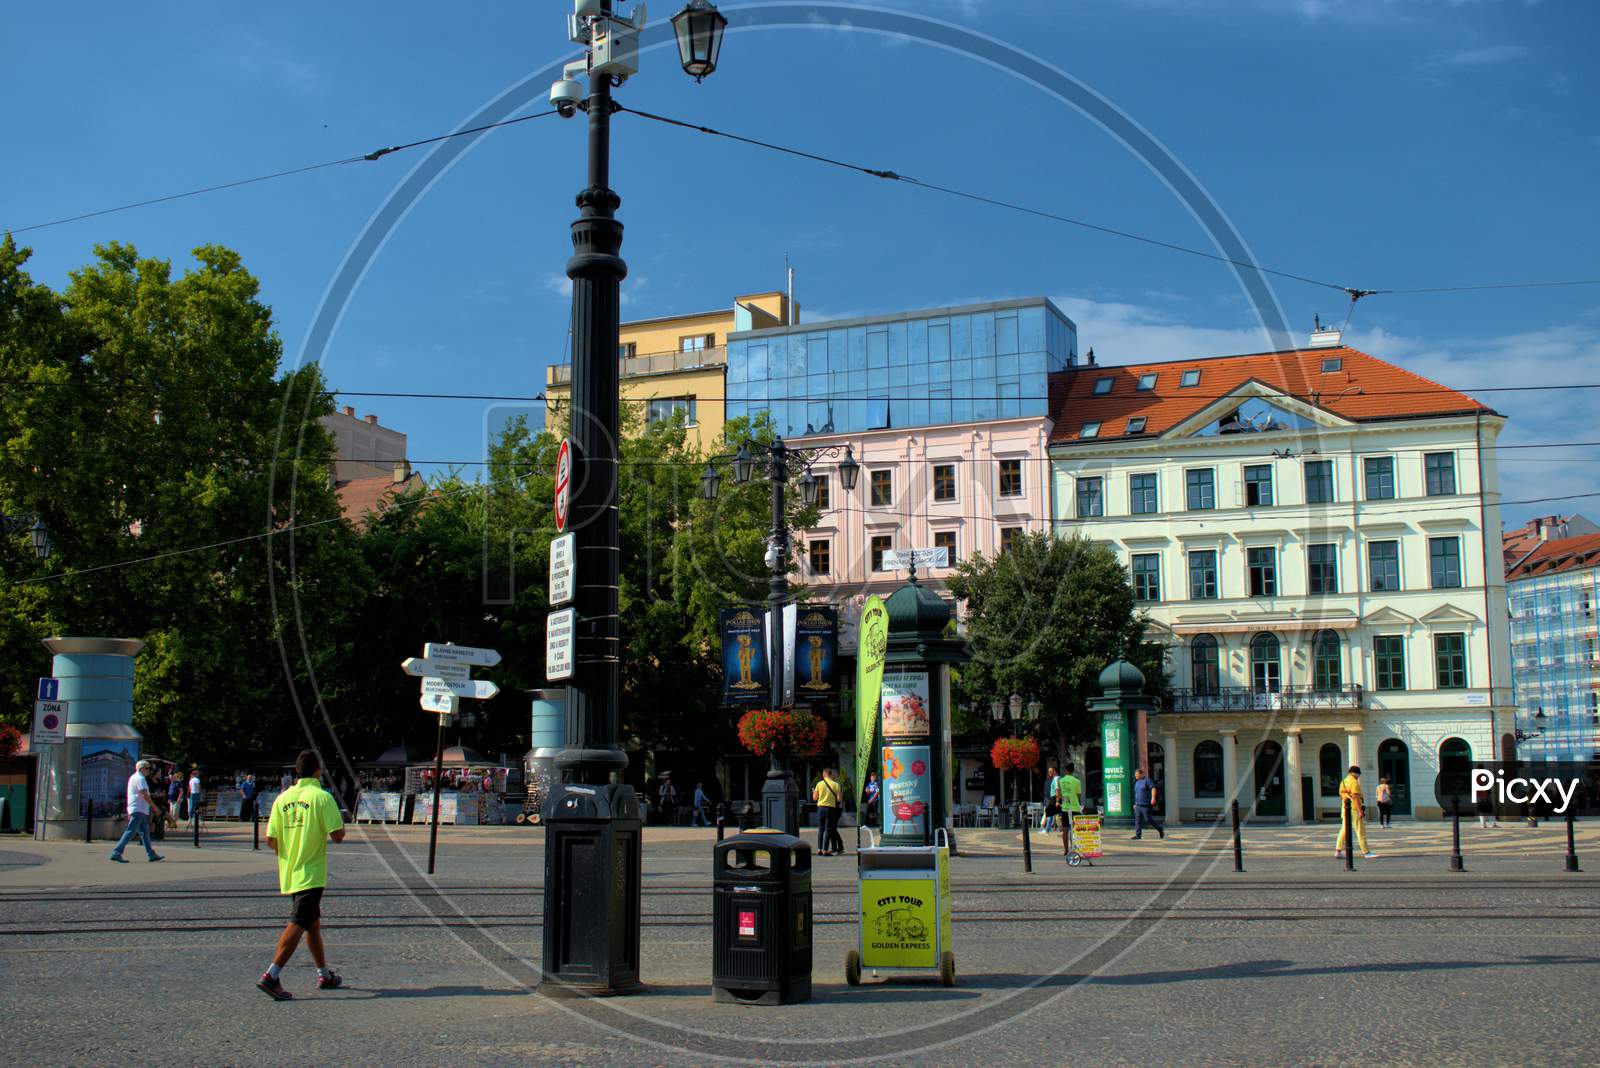 Bratislava in Slovakia downtown 11.9.2020